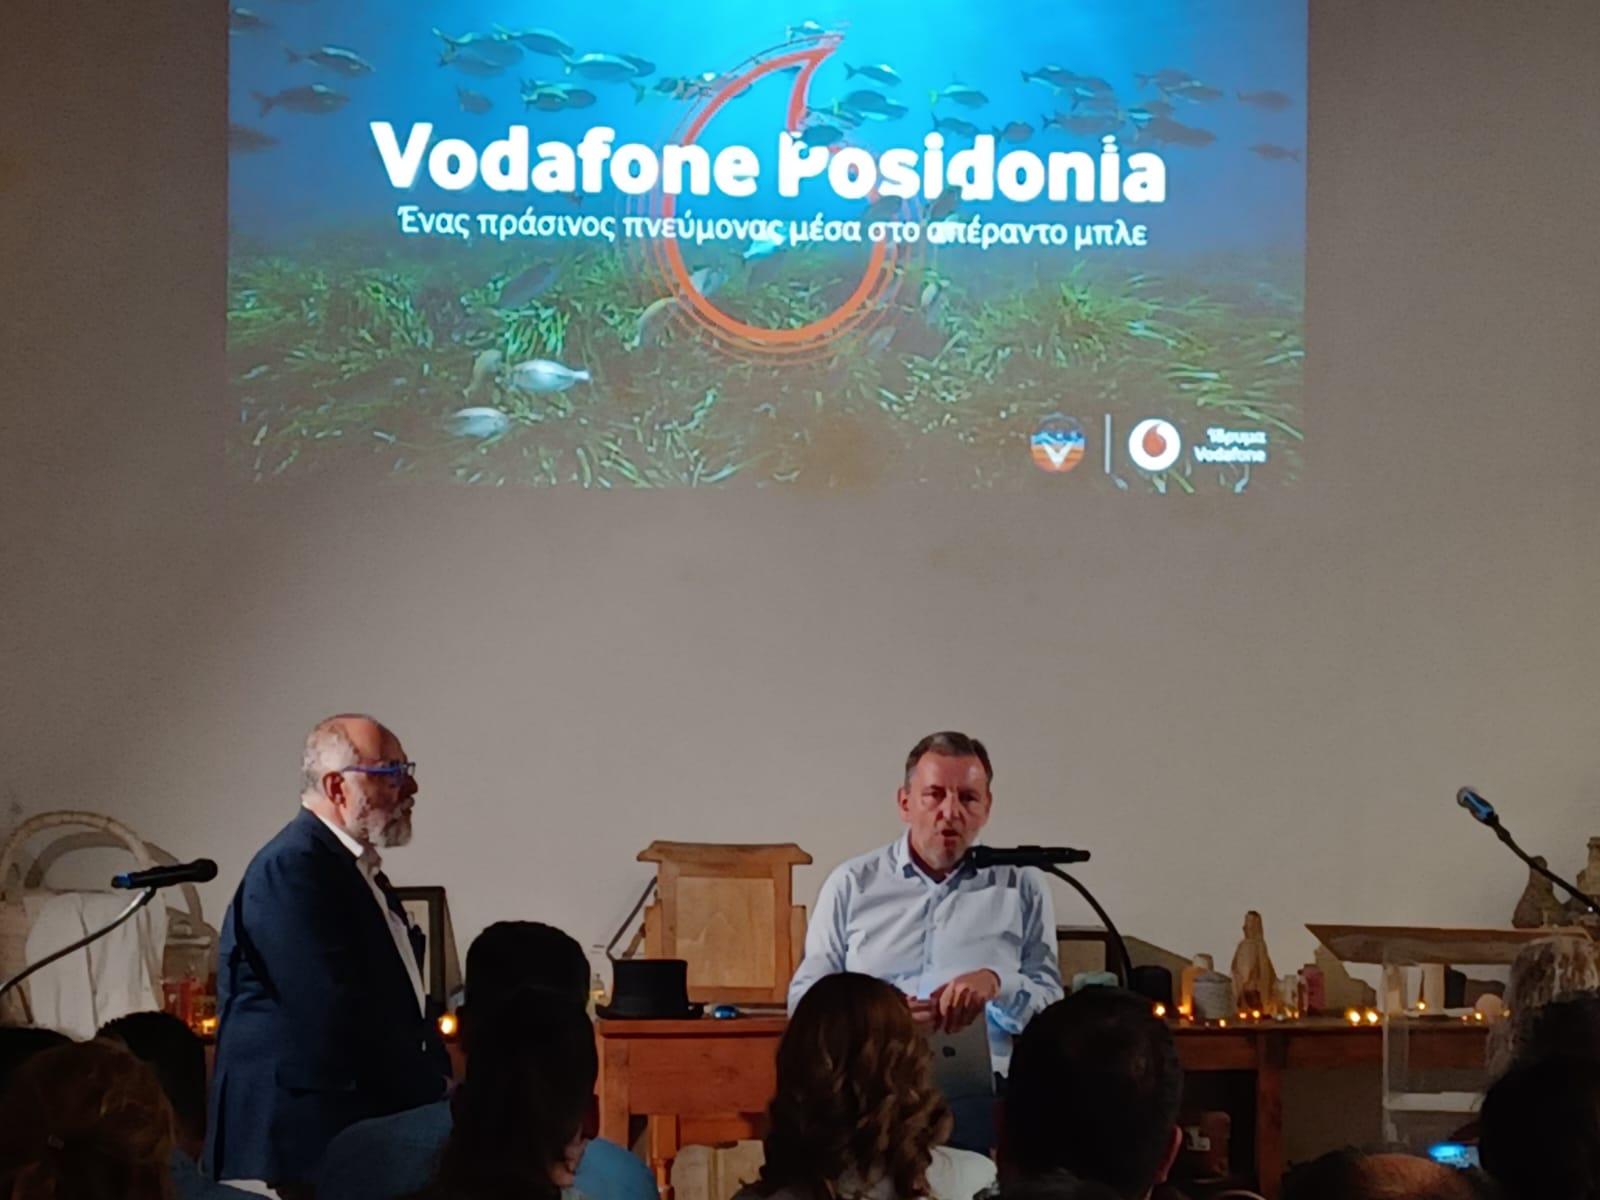 Vodafone: Προστατεύει τις ελληνικές θάλασσες – Γιατί επέλεξε να υποστηρίξει το περιβαλλοντικό πρόγραμμα Posidonia